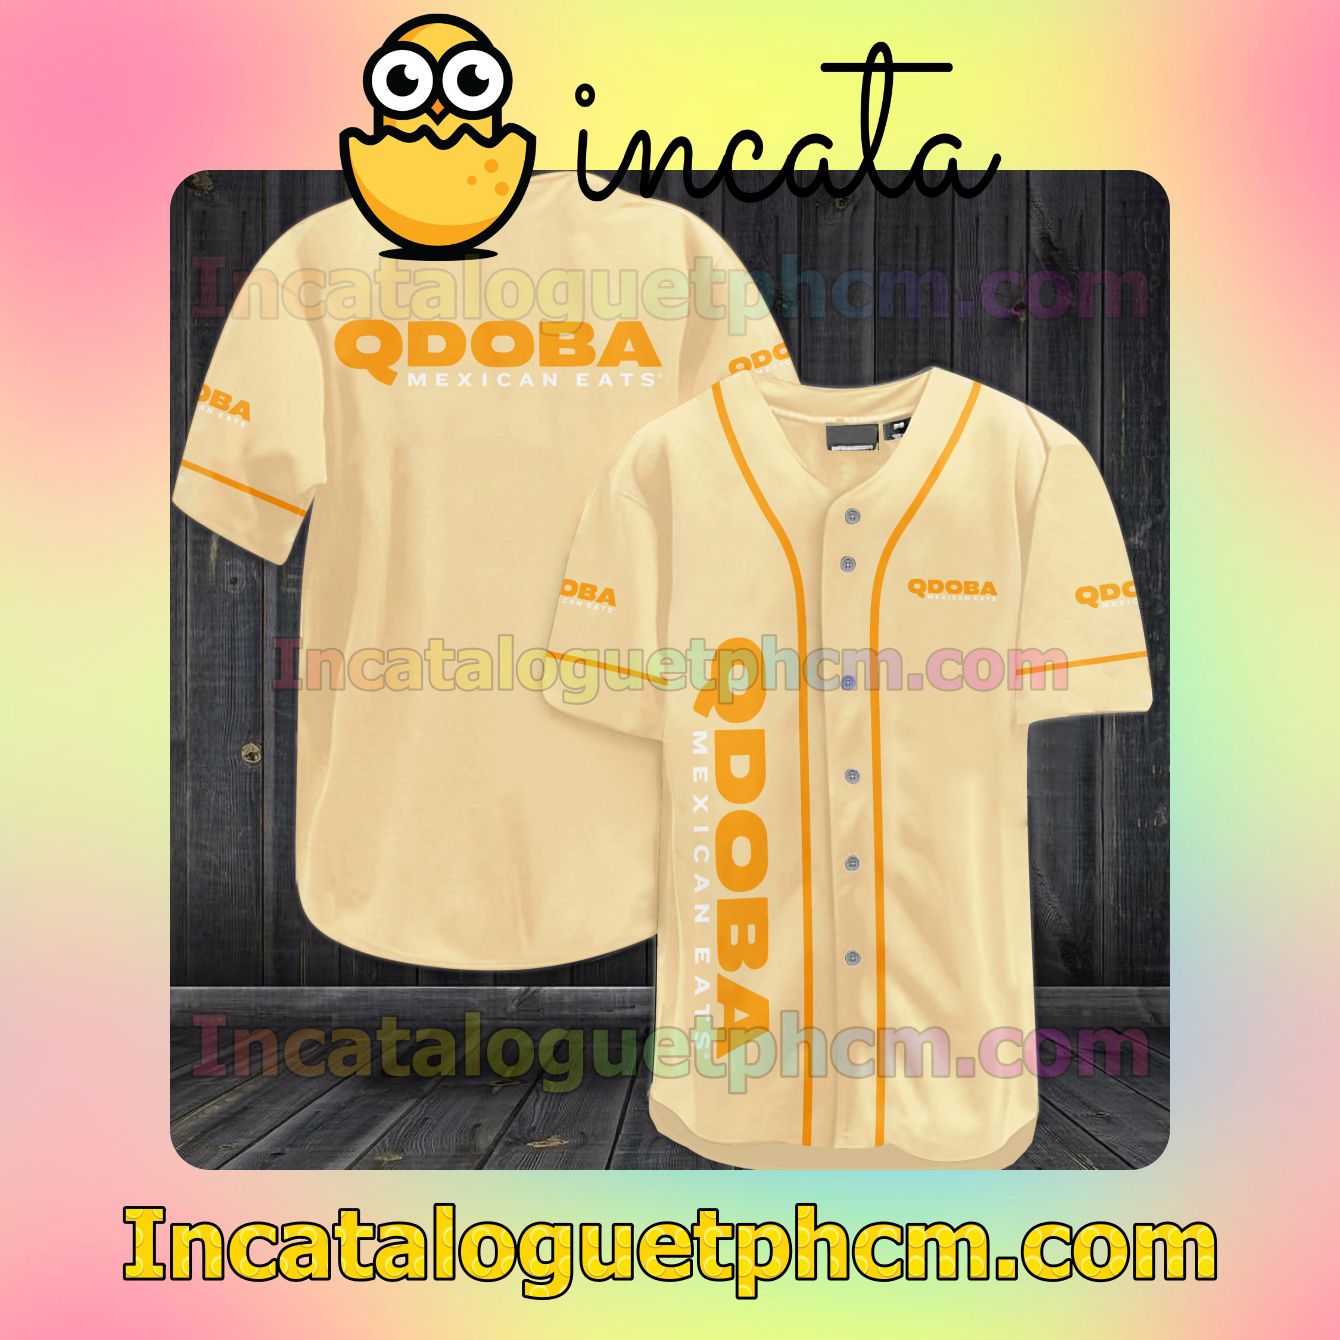 Sale Off Qdoba Baseball Jersey Shirt